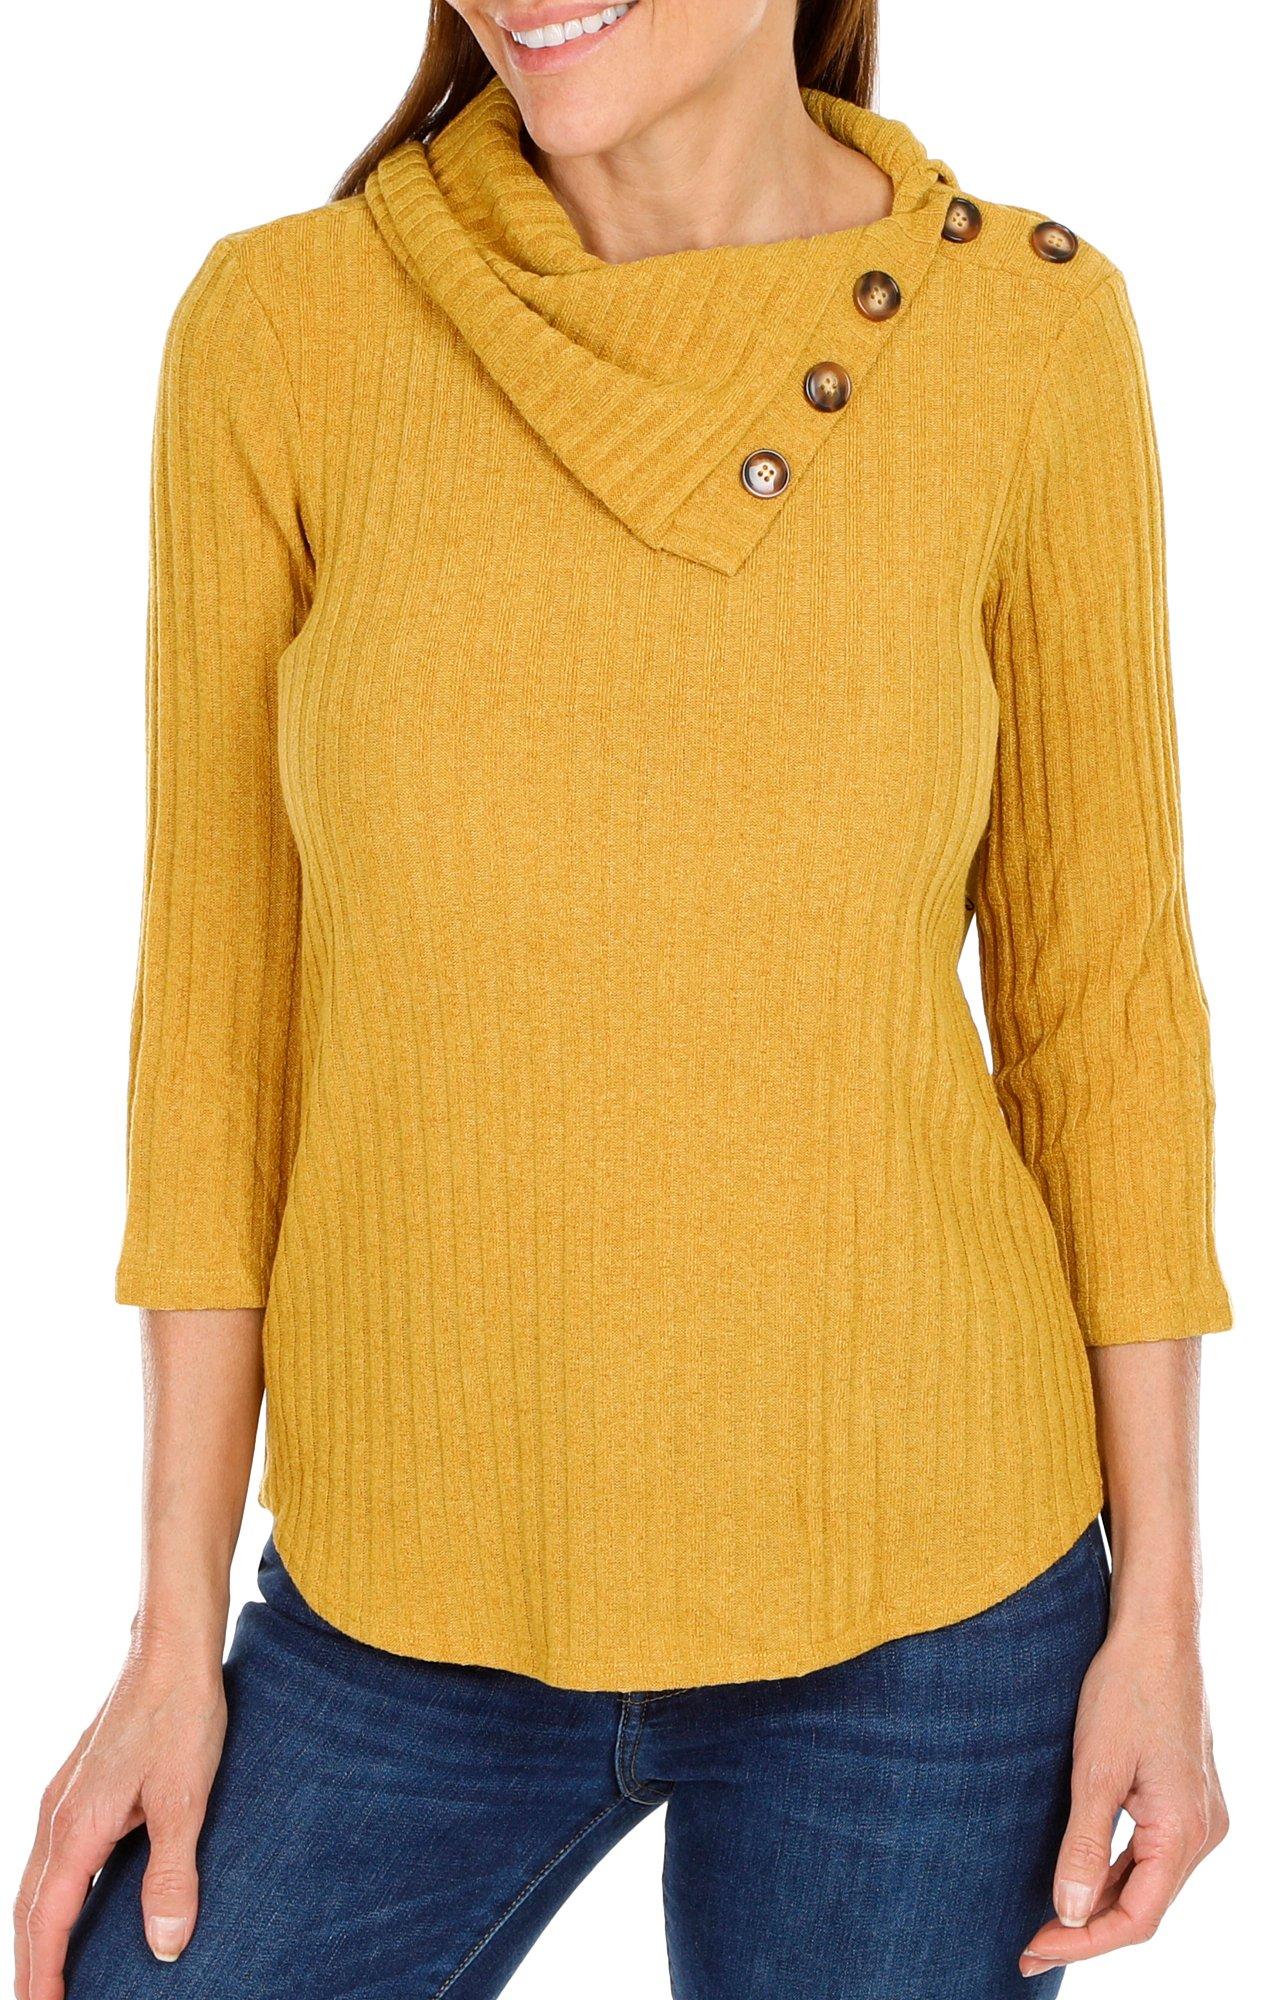 Women's Quarter Sleeve Miru Cowl Neck Sweater Top - Yellow